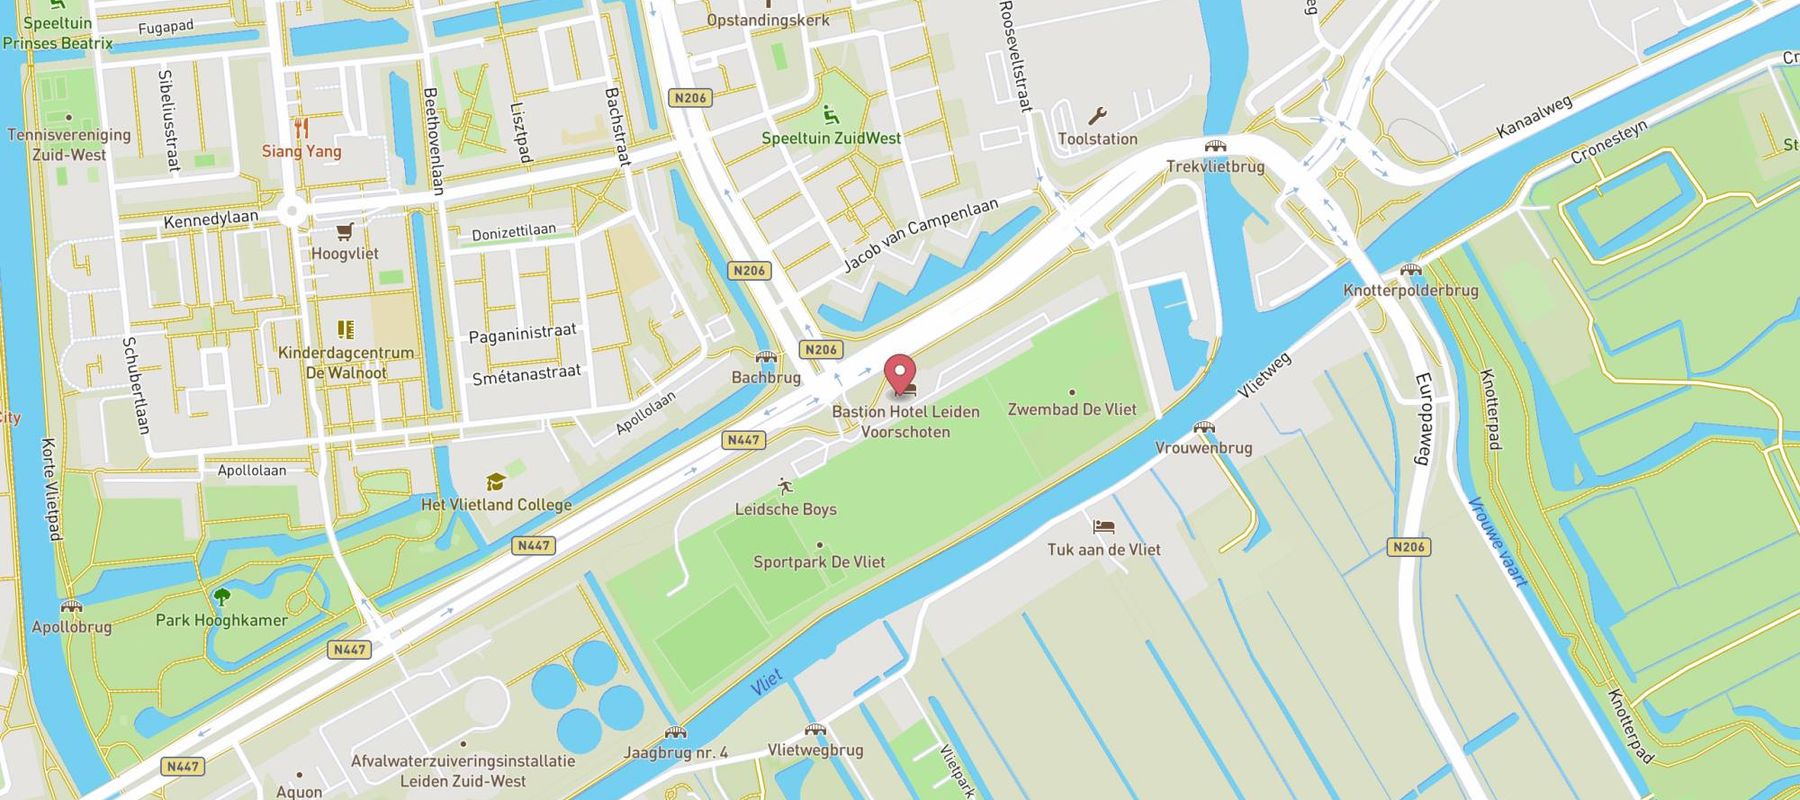 Bastion Hotel Leiden - Voorschoten map